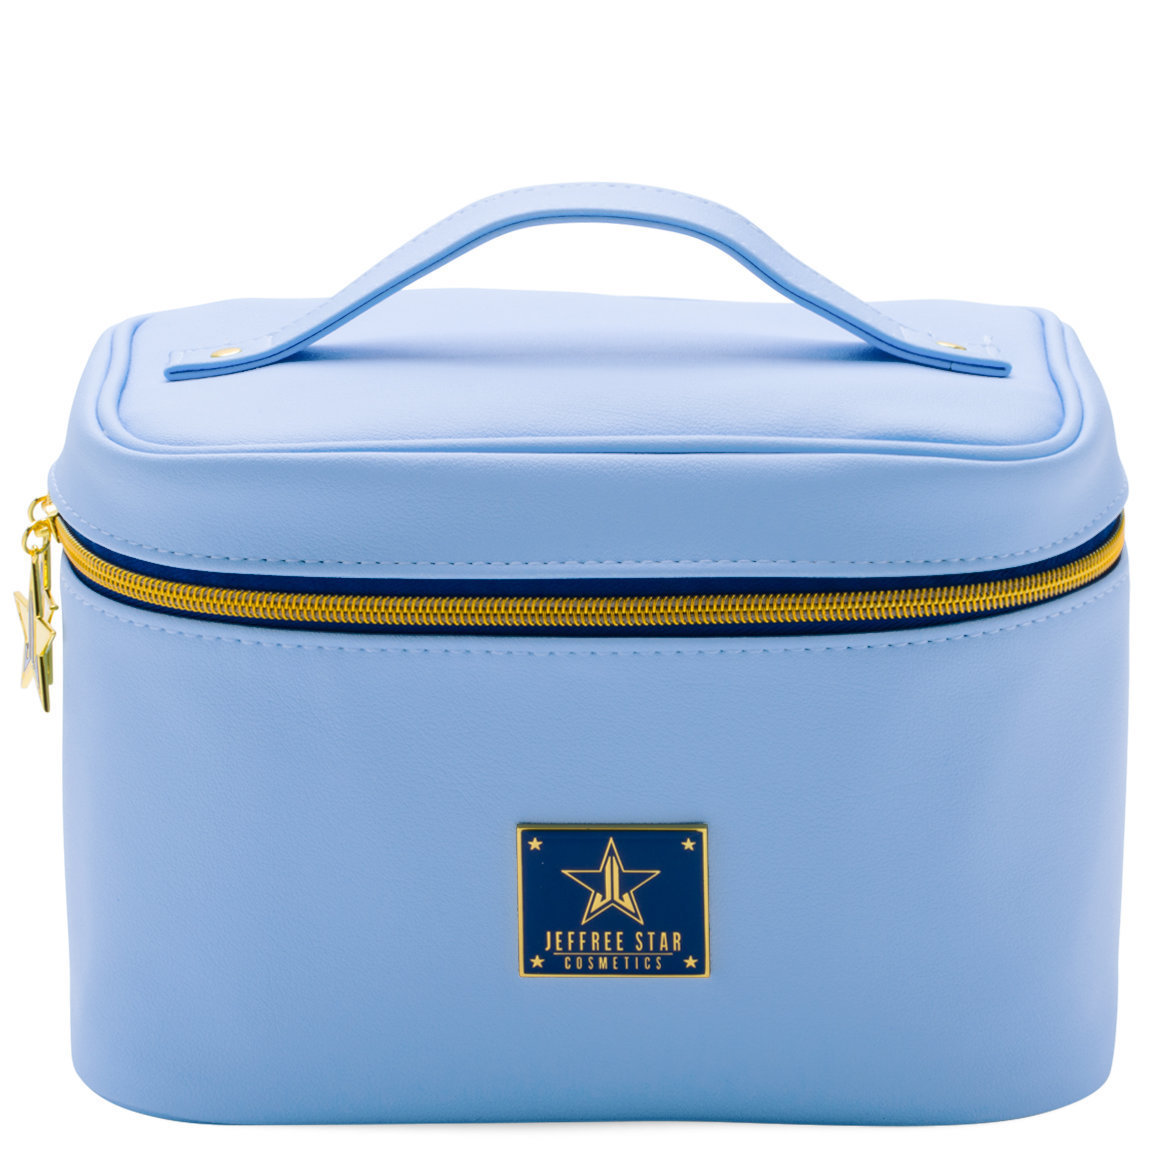 Jeffree Star Cosmetics Travel Makeup Bag Light Blue | Beautylish